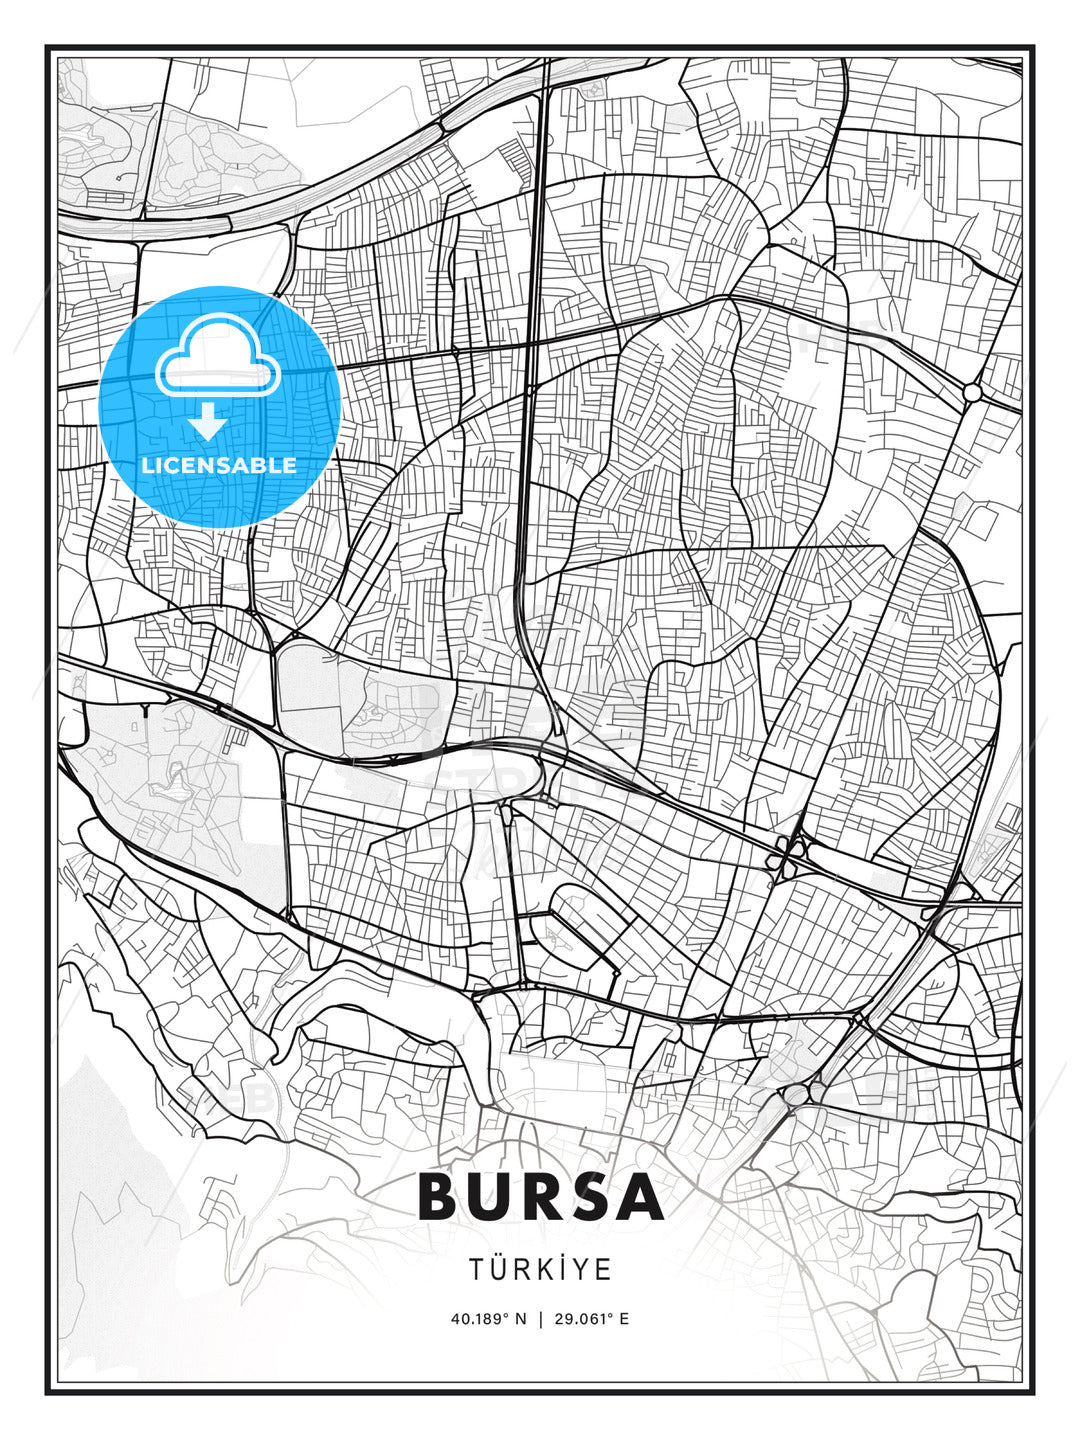 Bursa, Turkey, Modern Print Template in Various Formats - HEBSTREITS Sketches